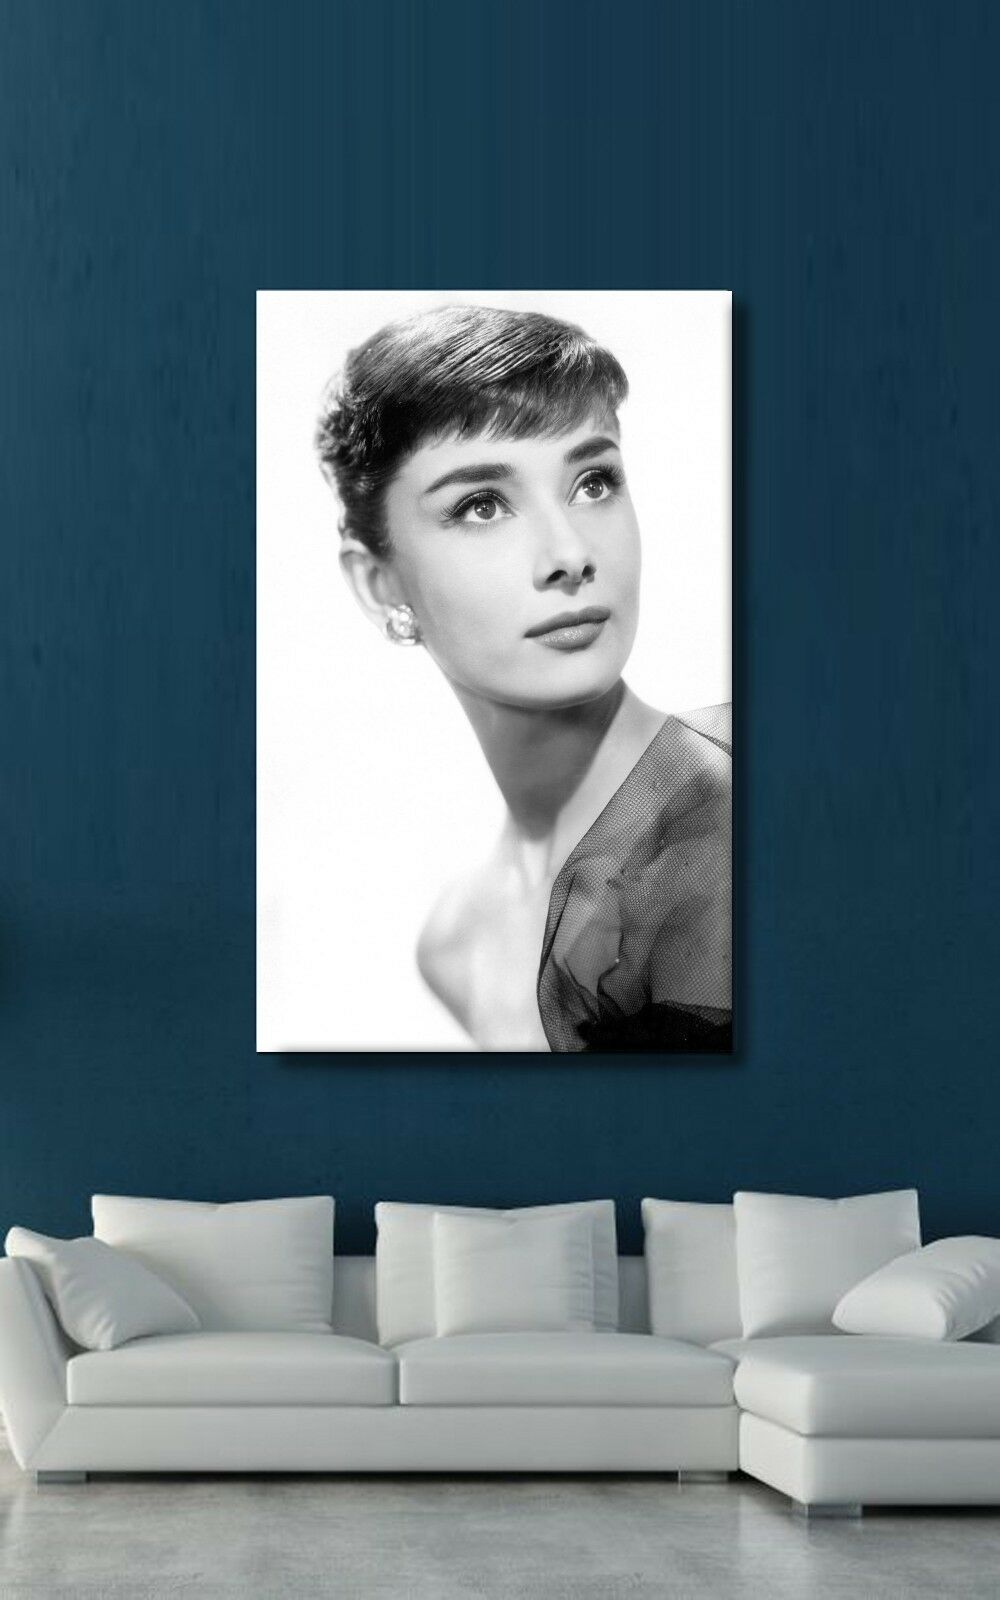 Audrey Hepburn Stretched Canvas Print Framed Wall Art Fashion Shop Decor Gift